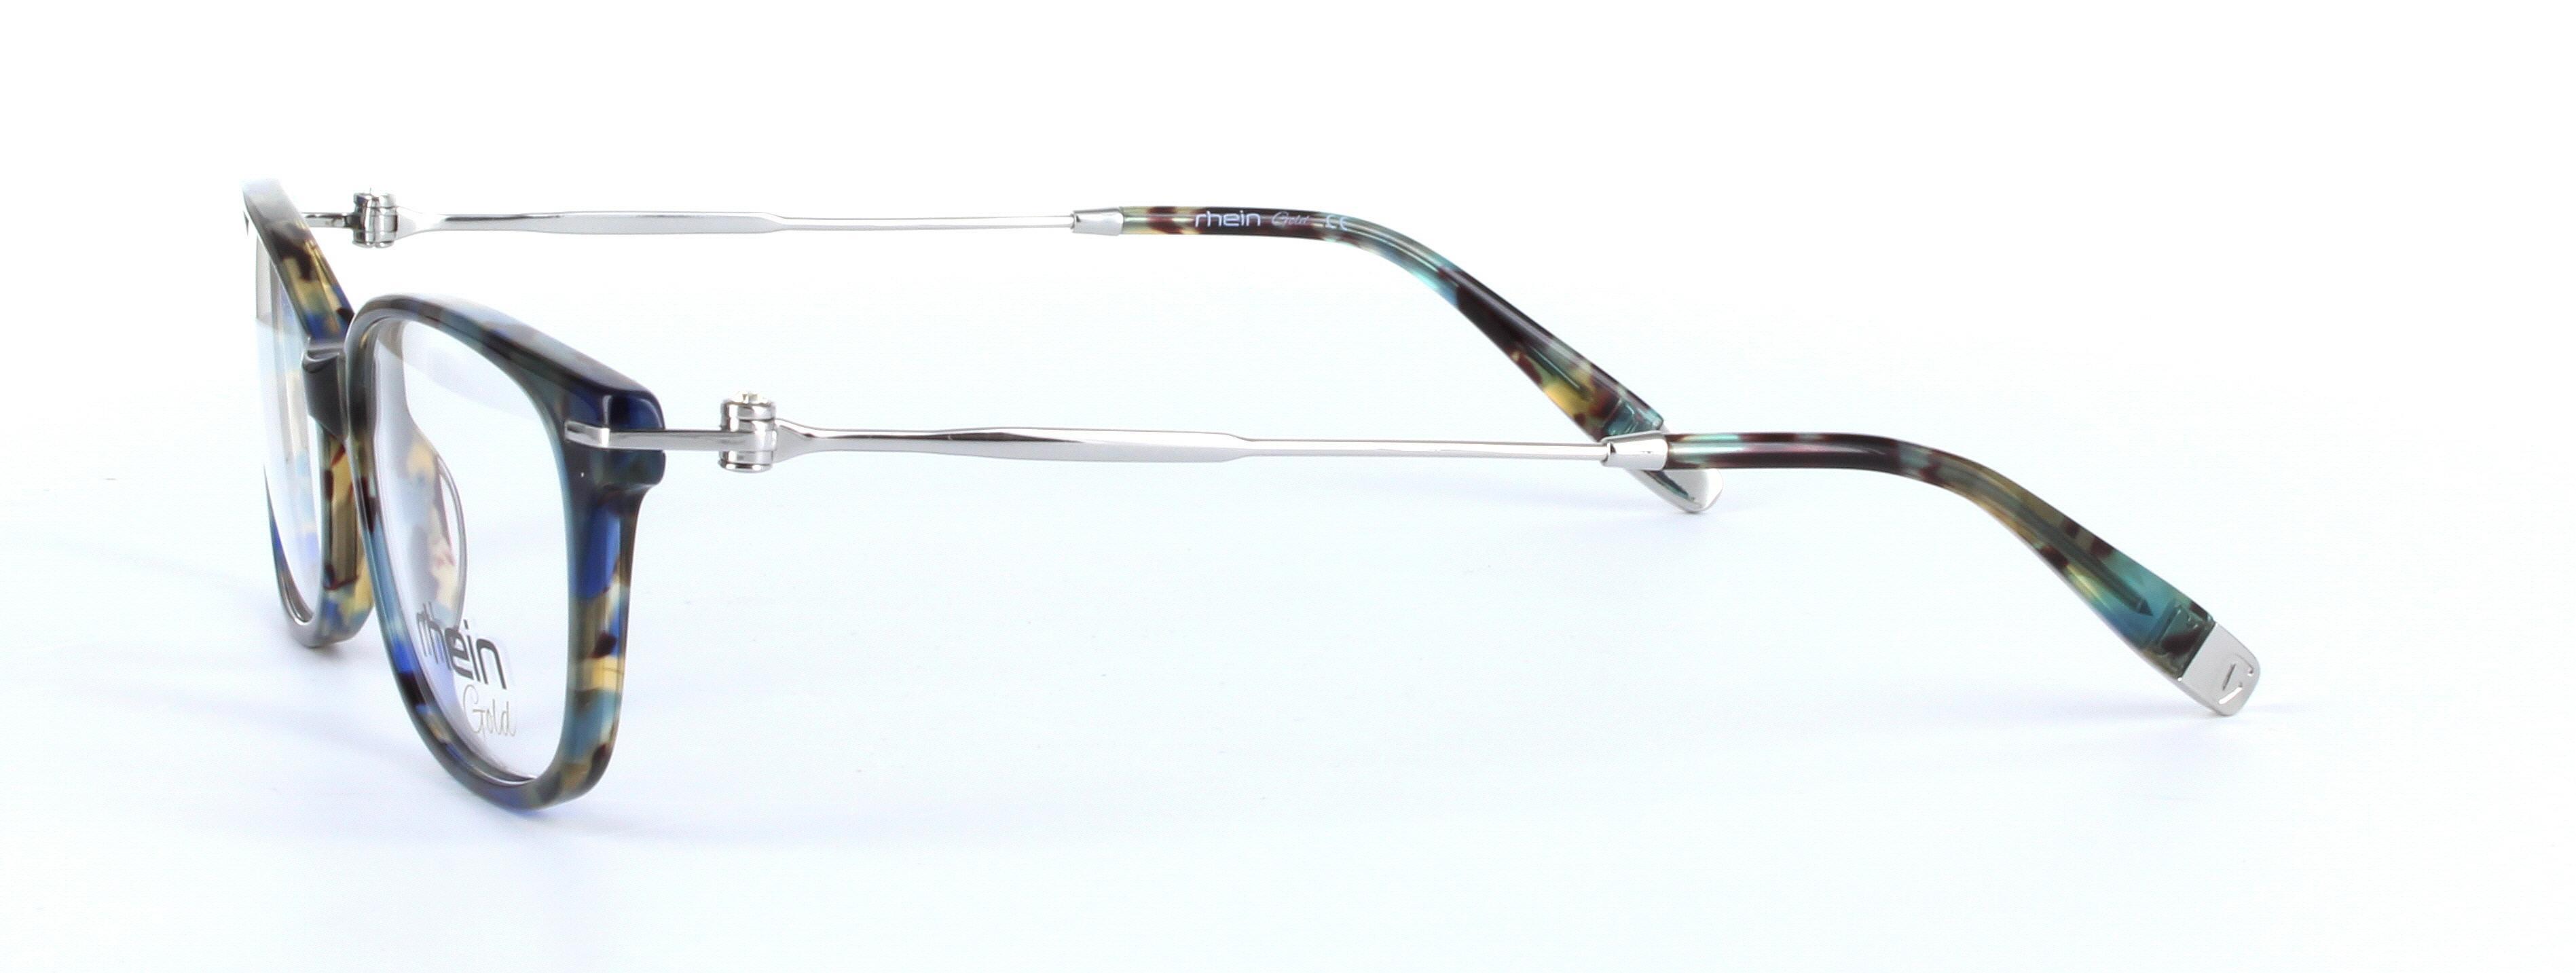 Locarno Tortoise Full Rim Oval Plastic Glasses - Image View 2